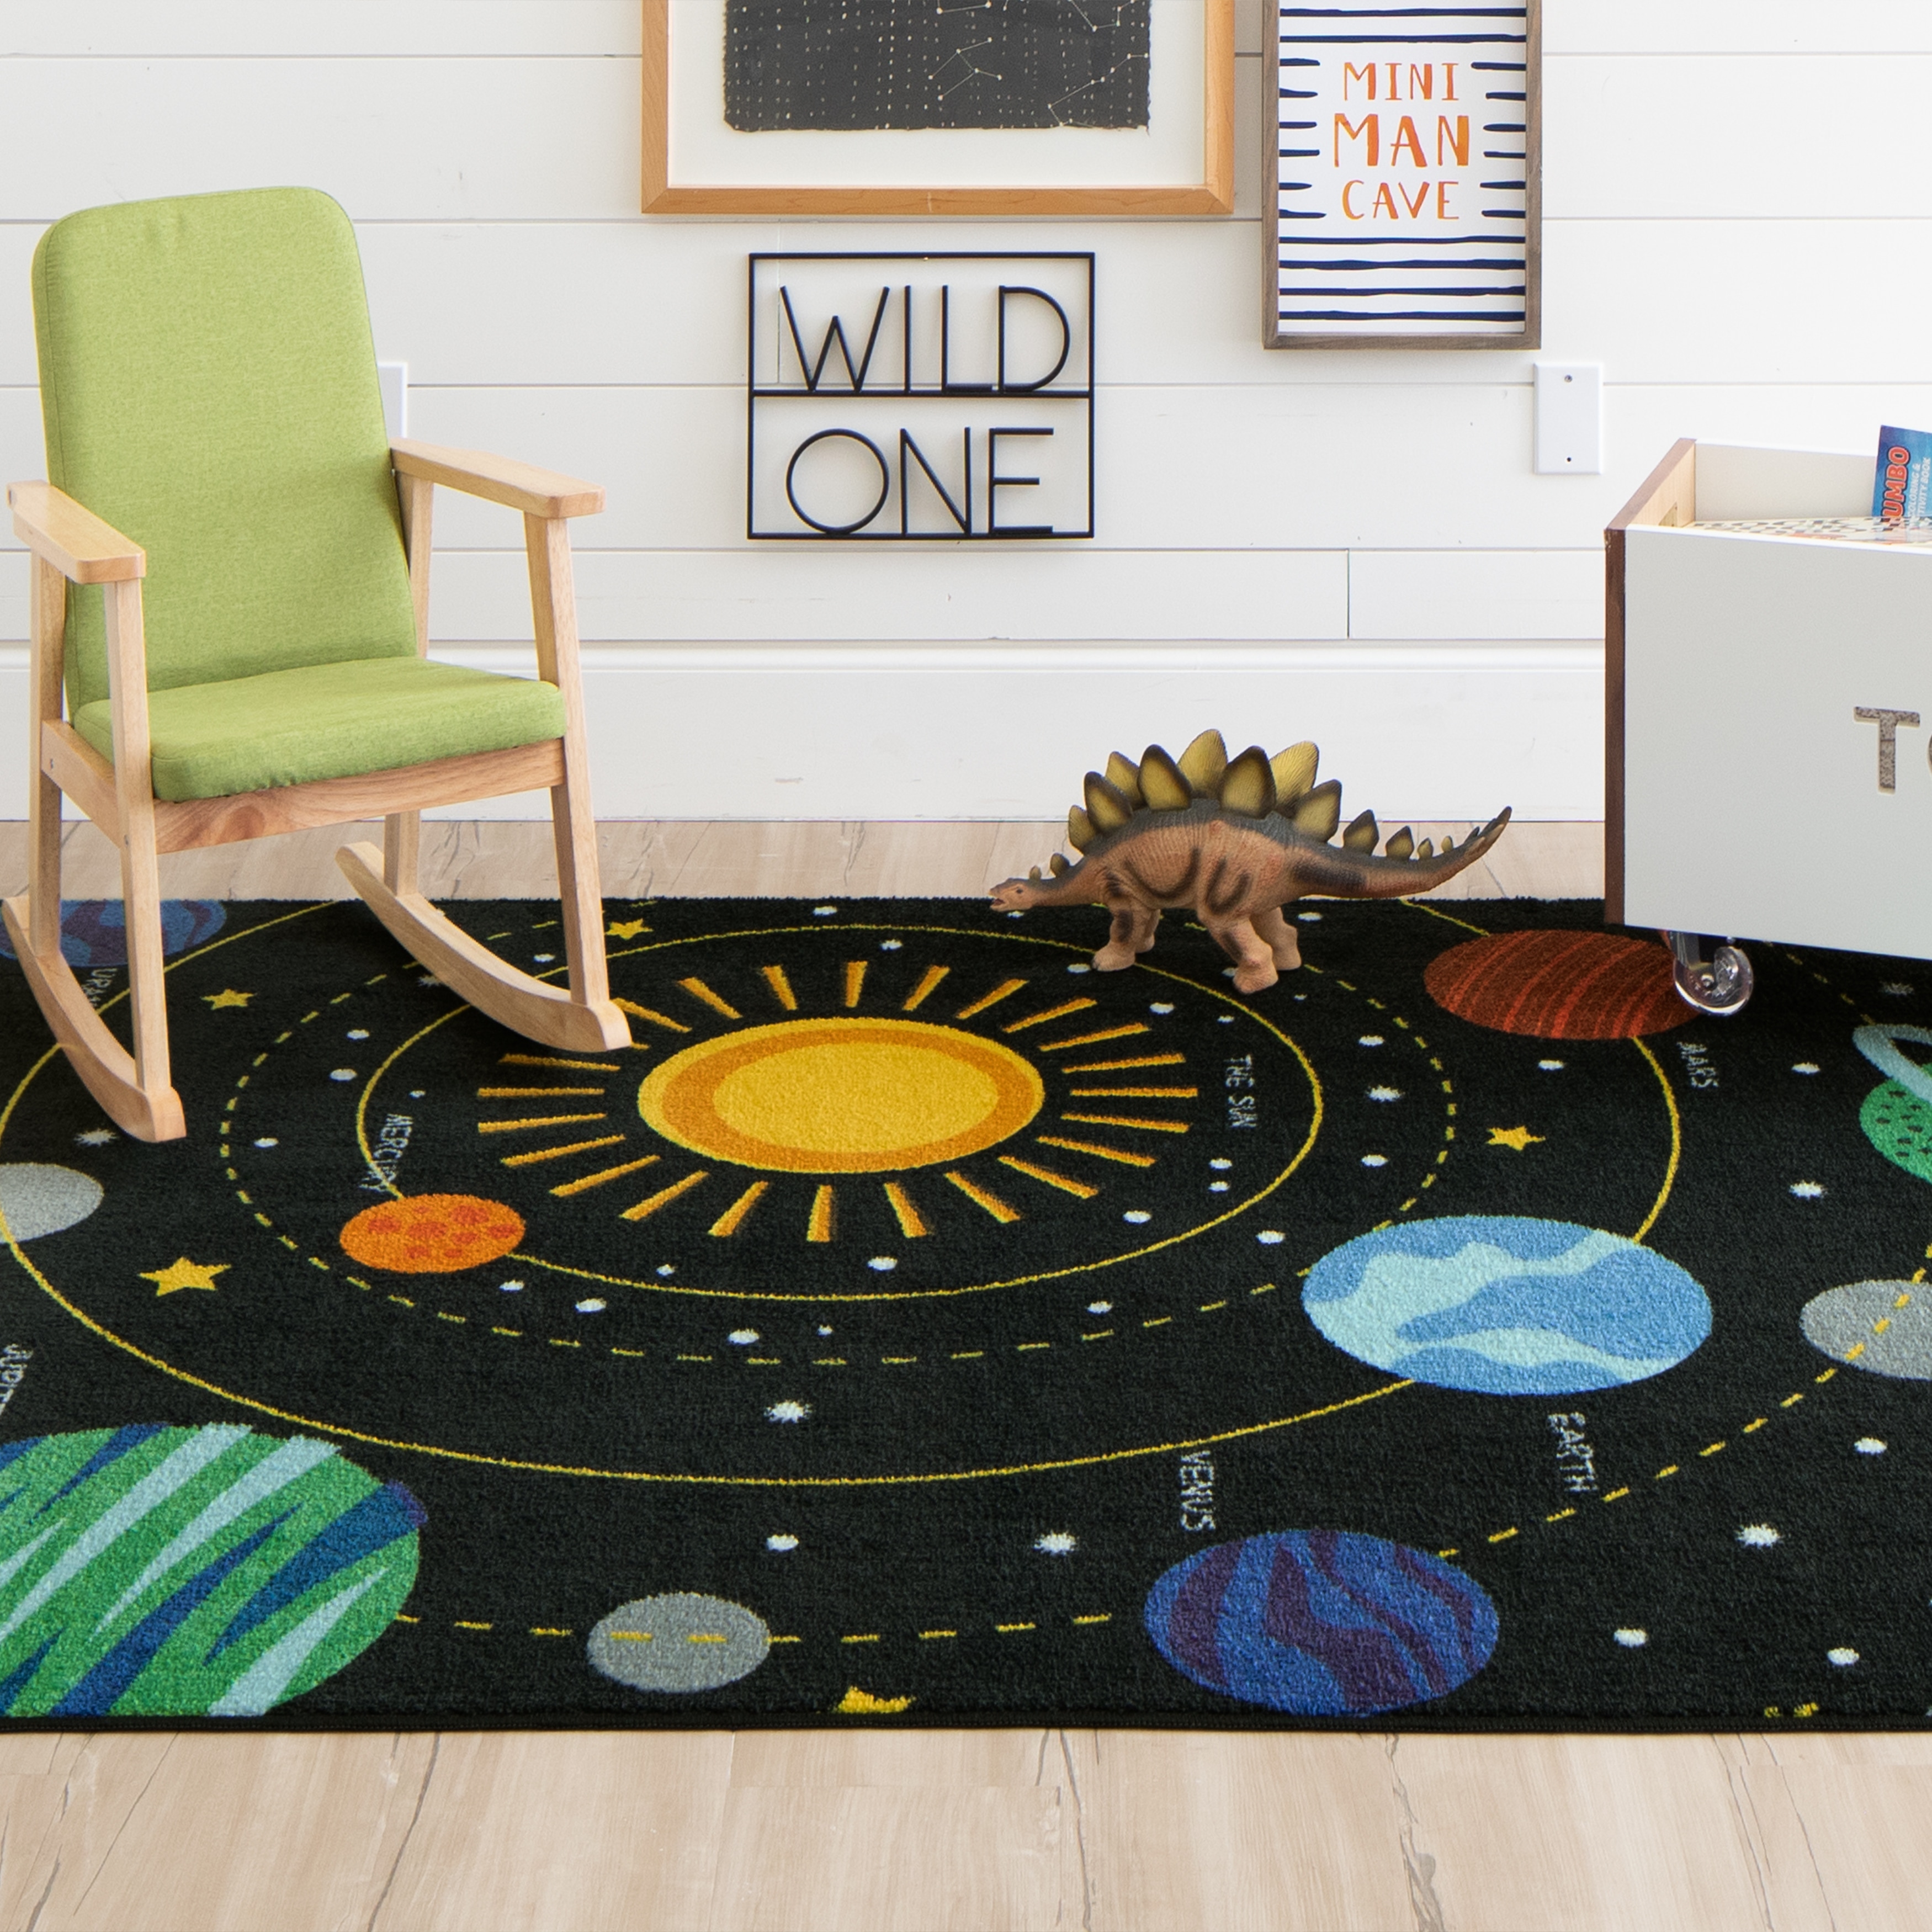 Space Planet Earth Home Area Rug Living Room Bedroom Floor Carpet Mat Yoga Rug 